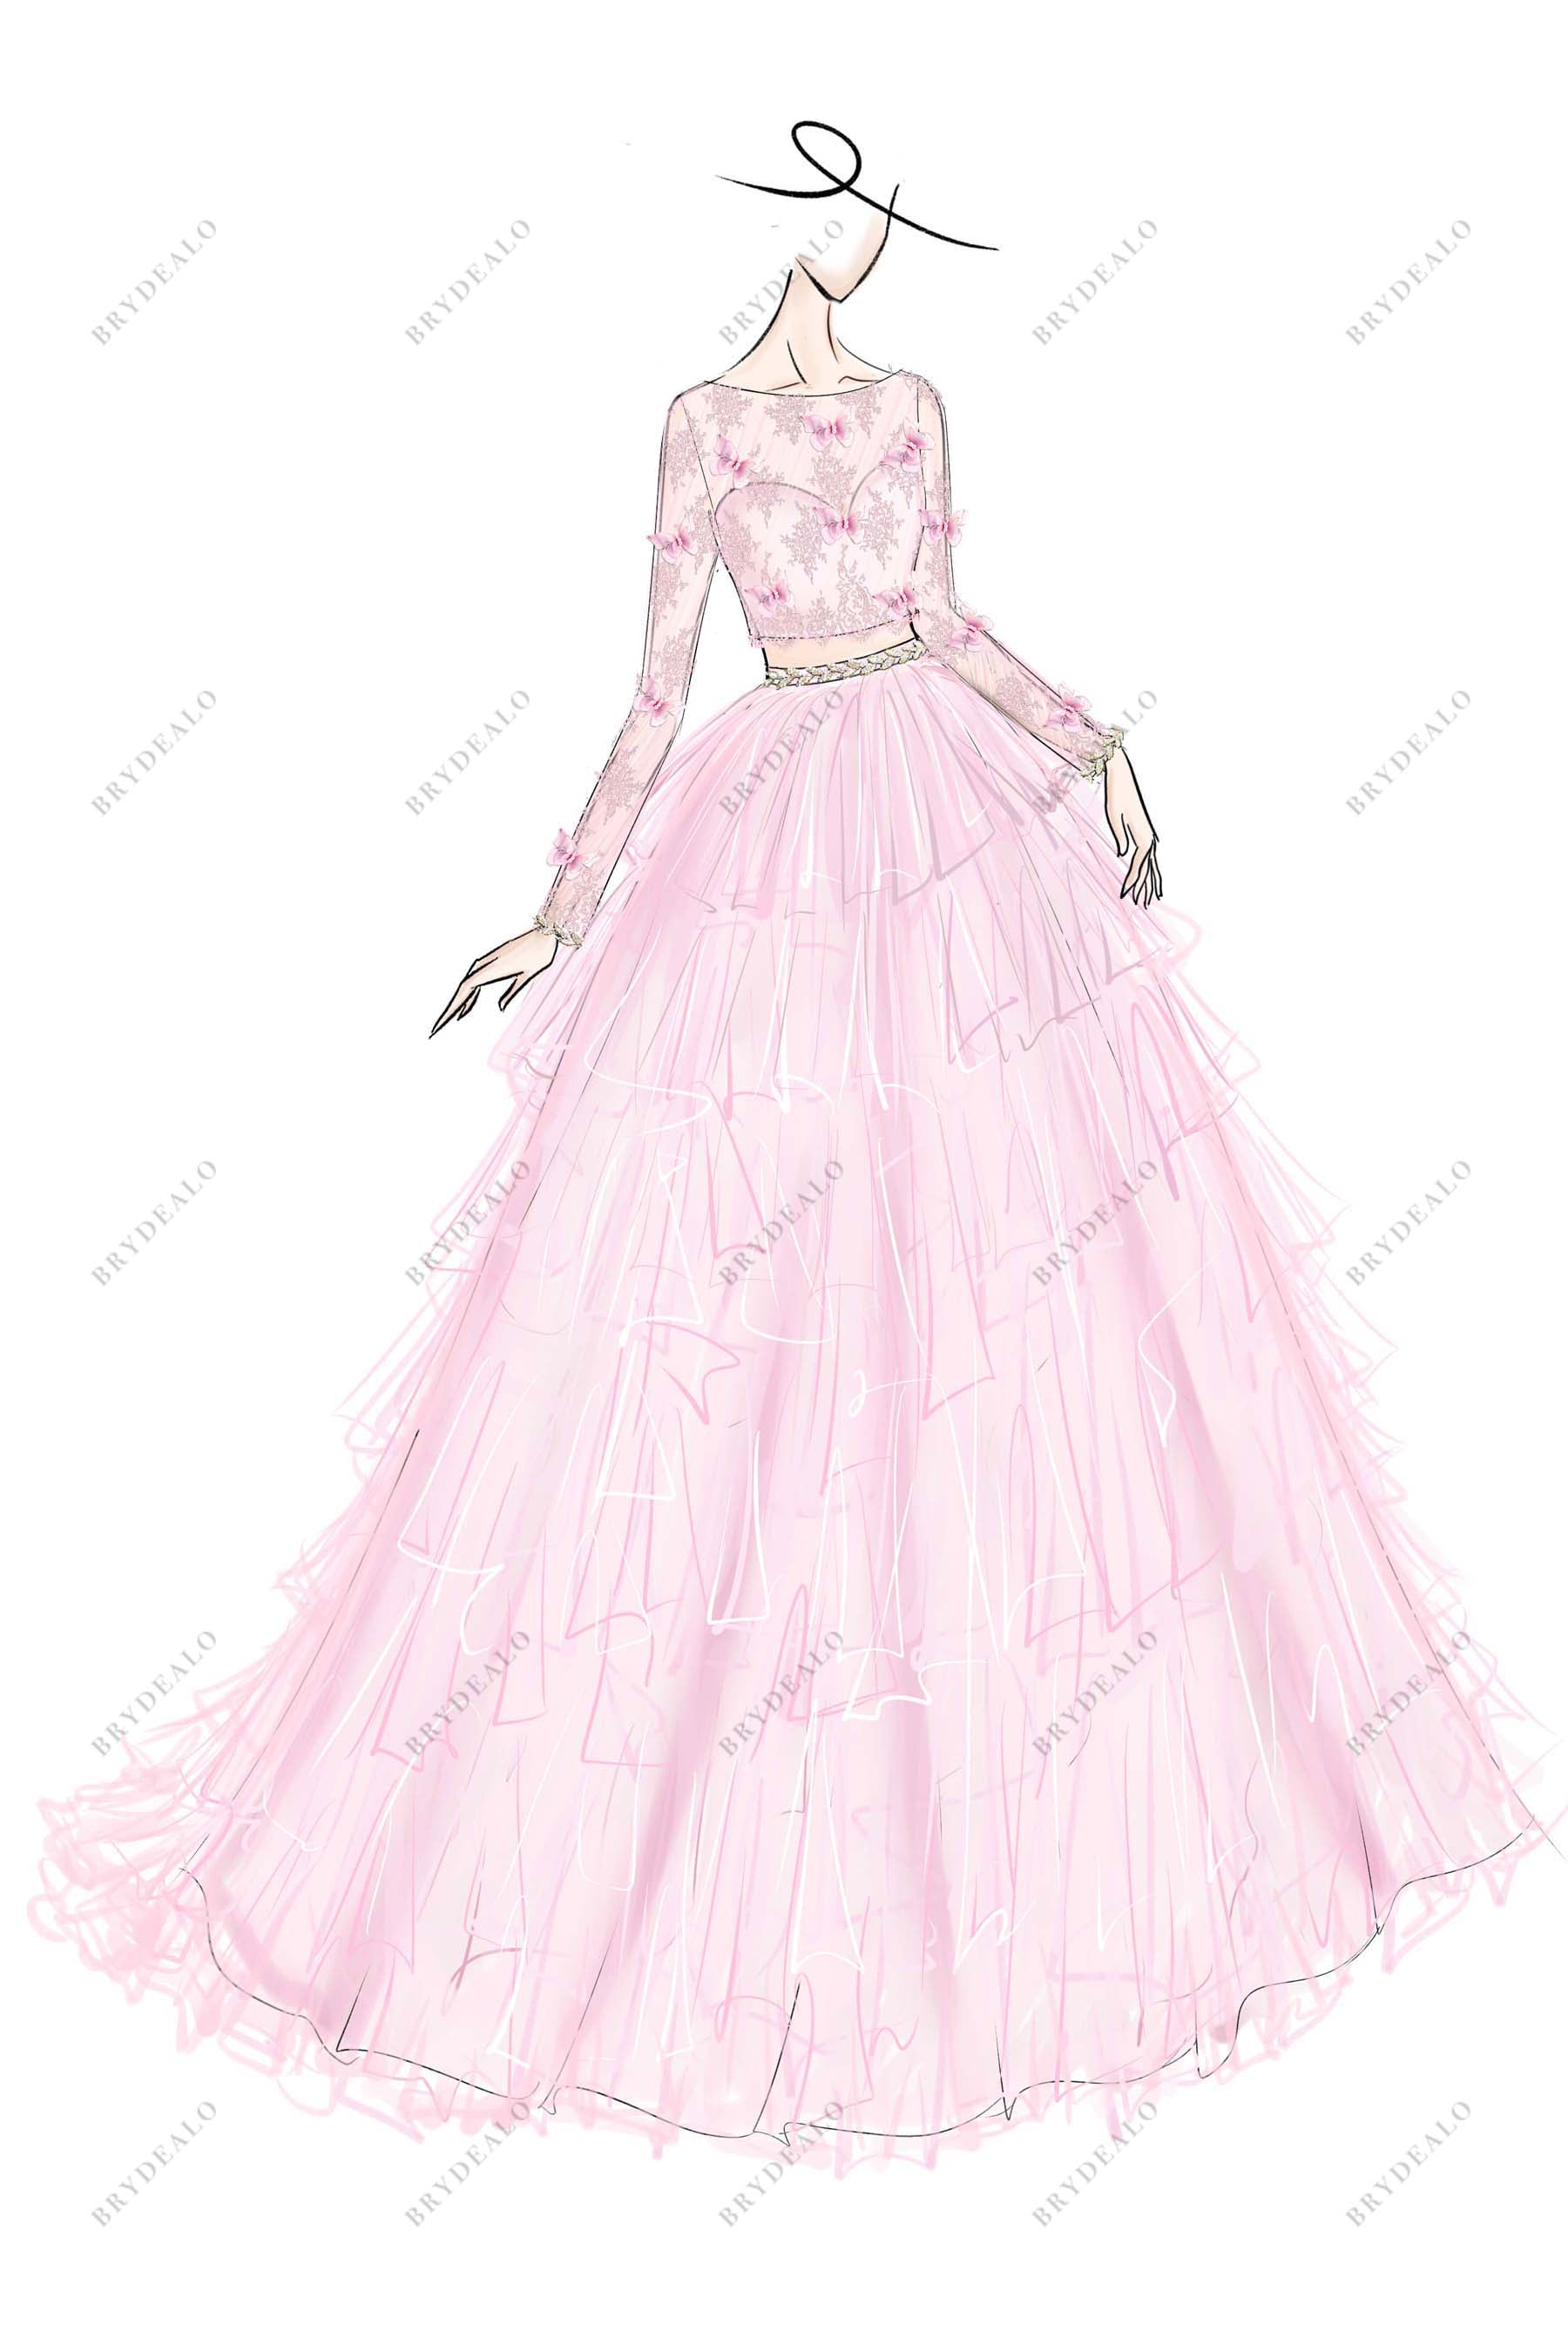 pink A-line lace wedding dress sketch